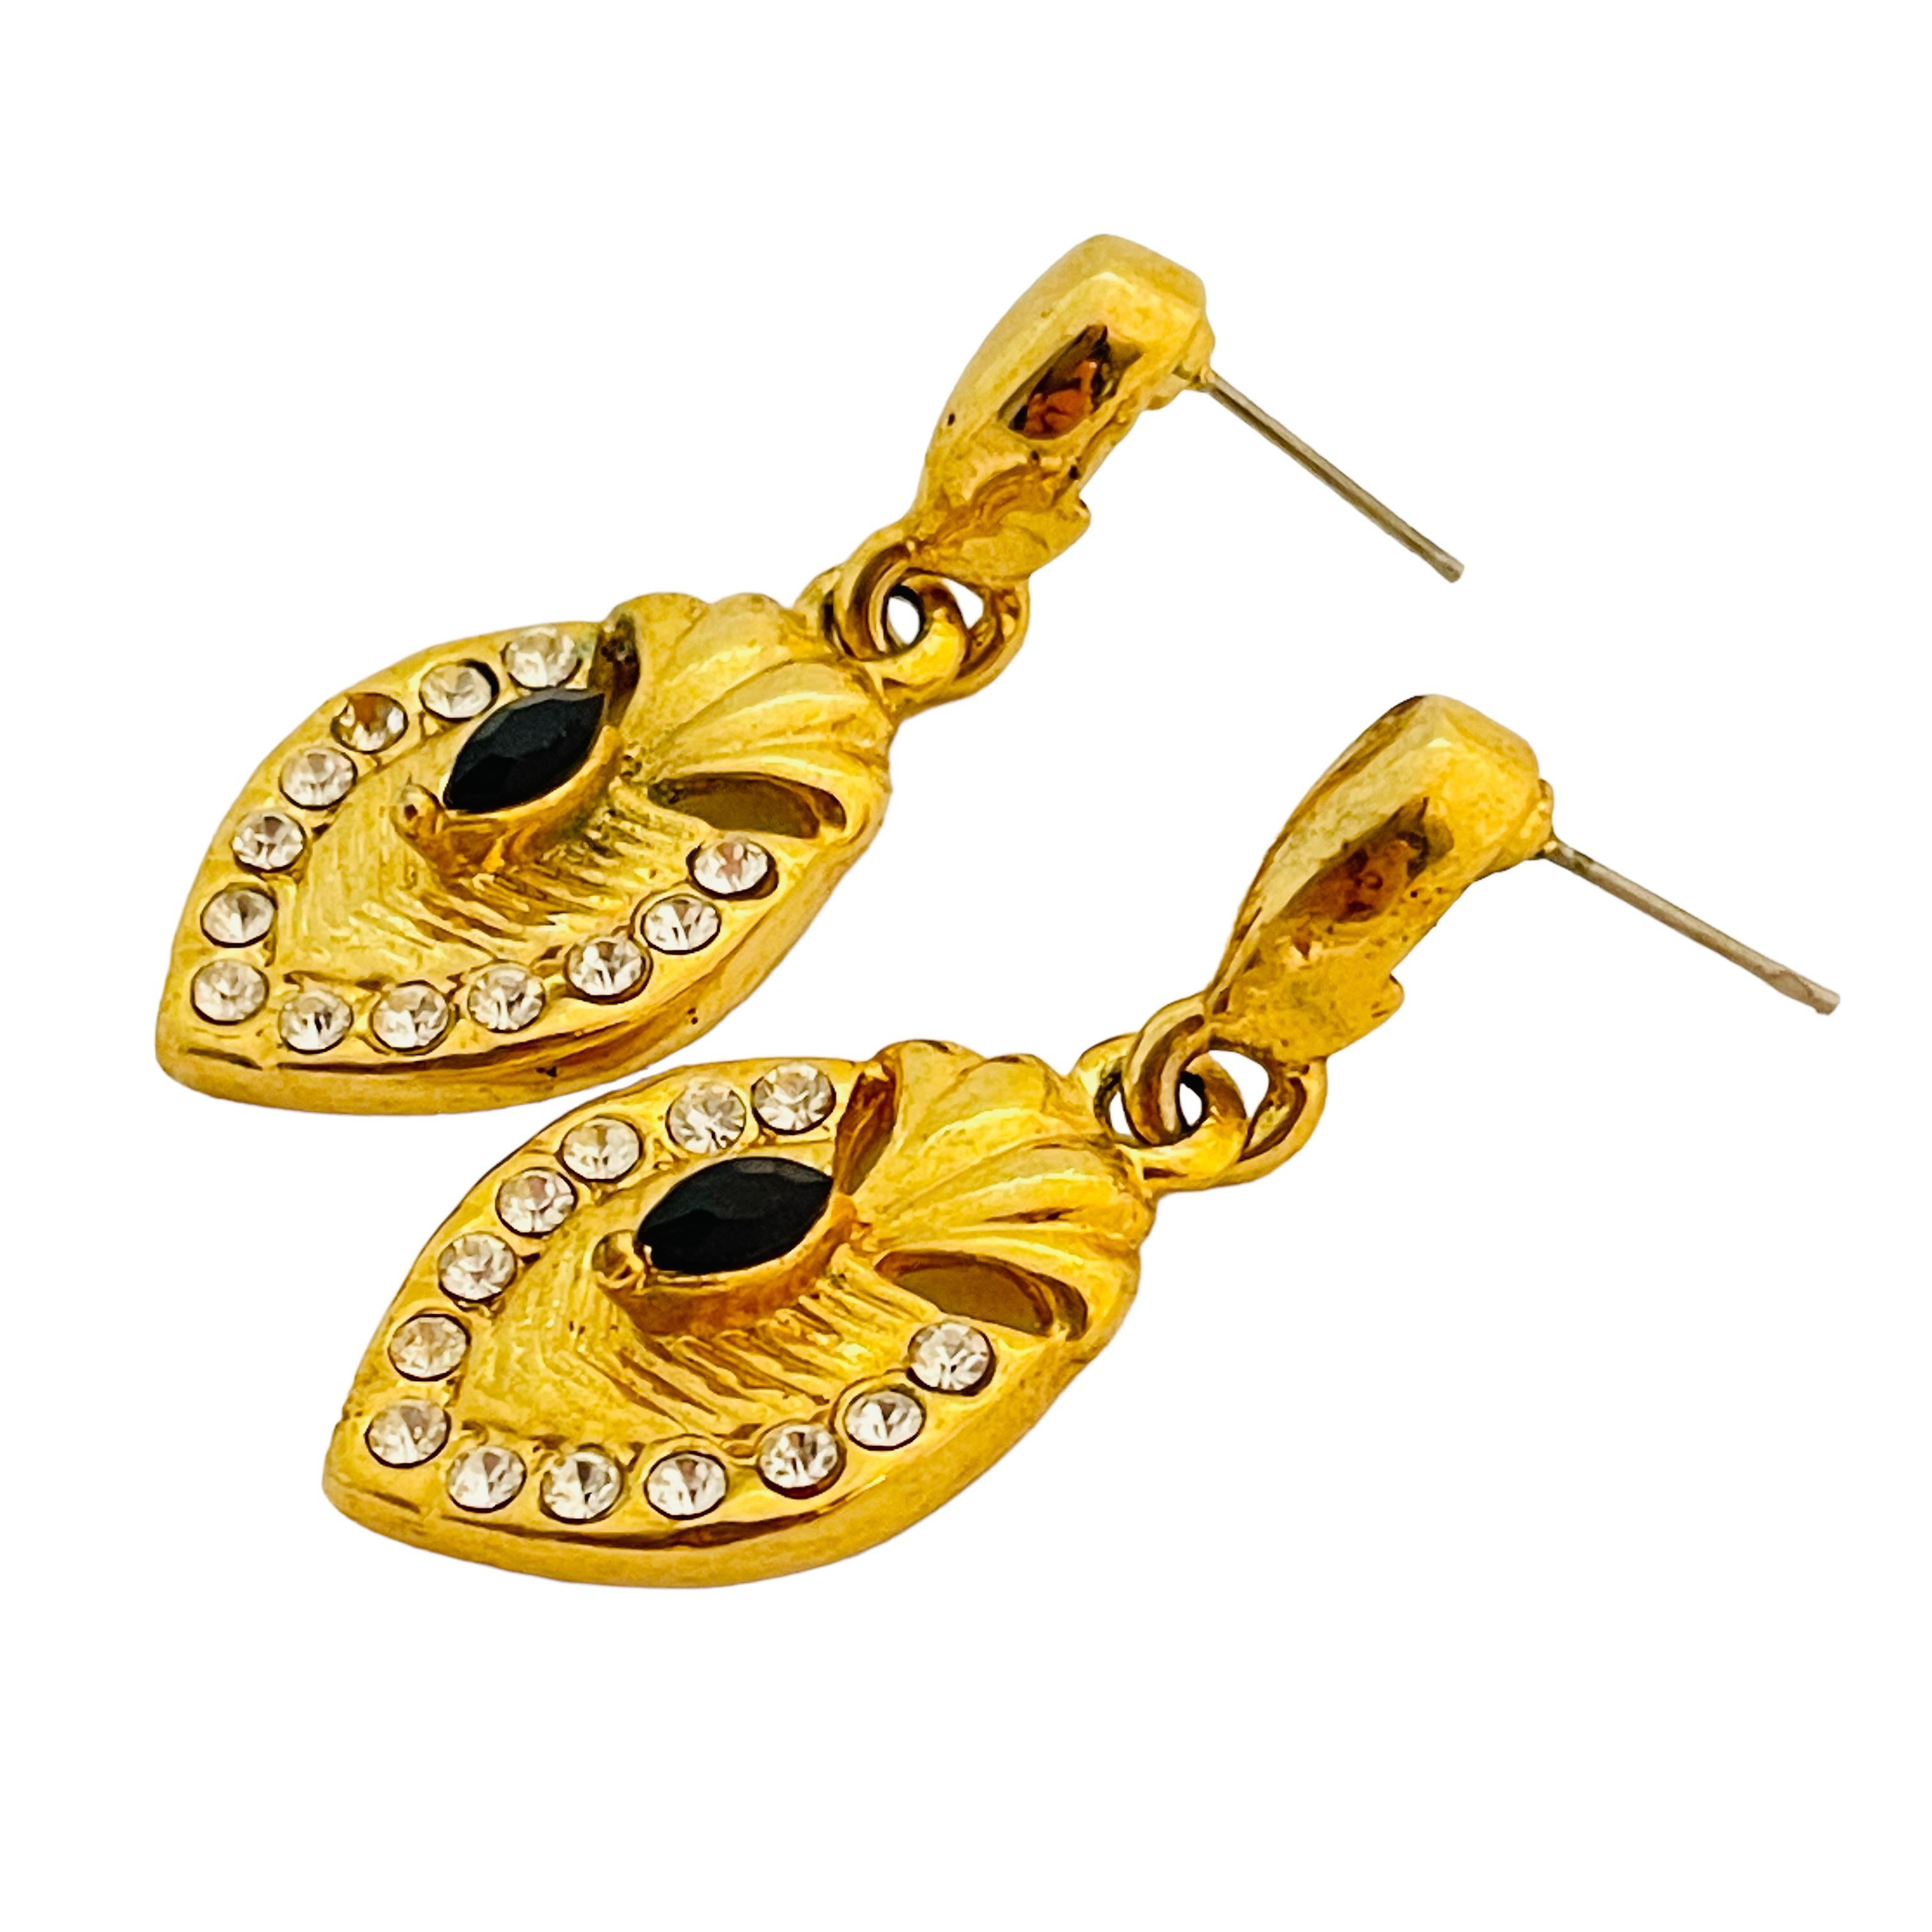 DETAILS

• unsigned

• gold tone with rhinestones

• vintage designer pierced earrings

MEASUREMENTS

• 1.5